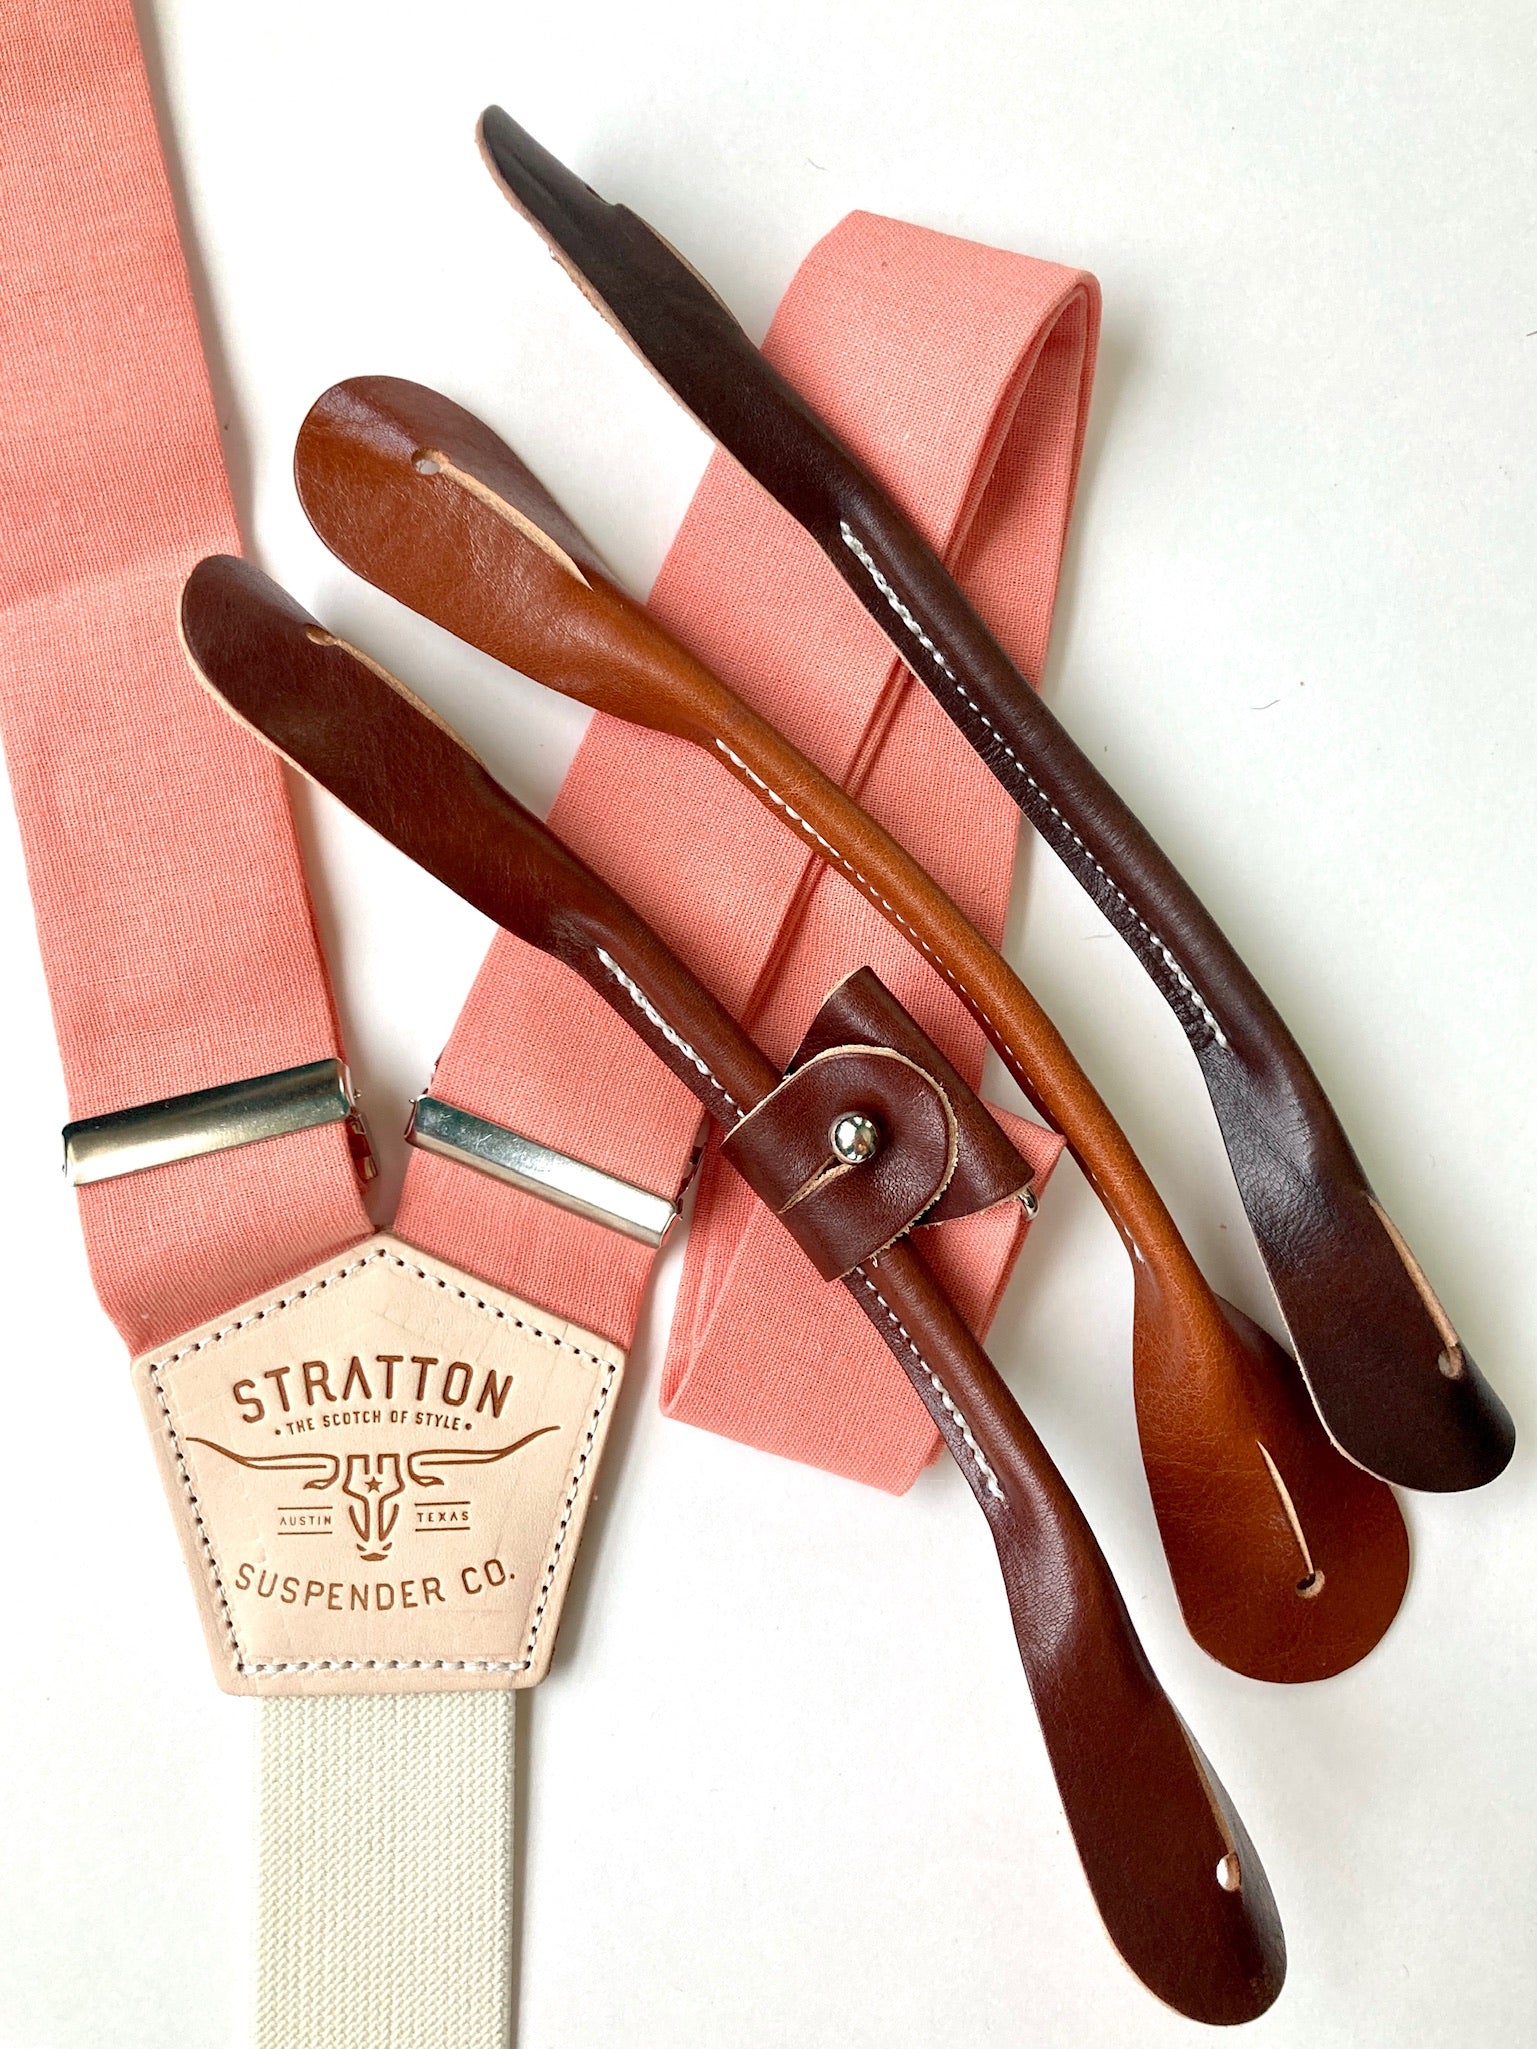 Stratton Suspender Co. Copper Linen Button-On Suspenders Set Chocolate